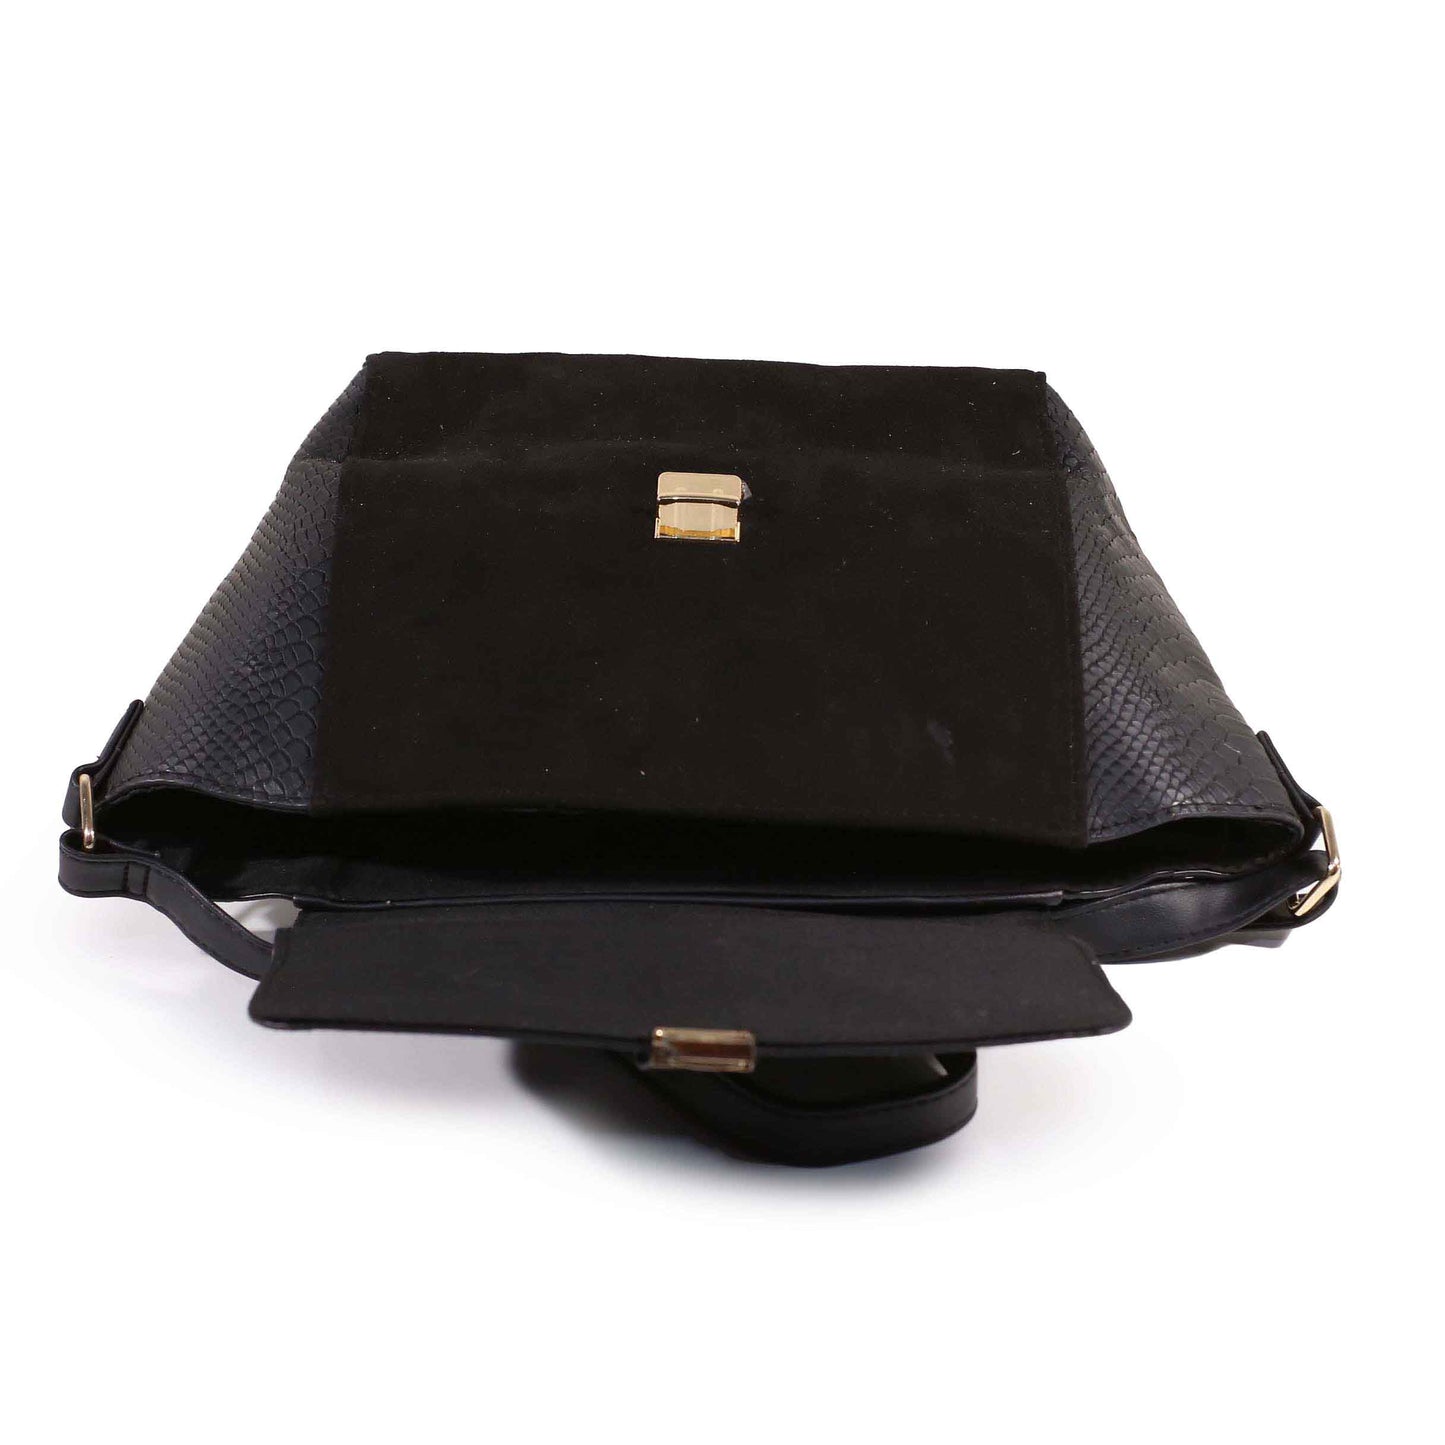 Primark Black Top Handle Bag